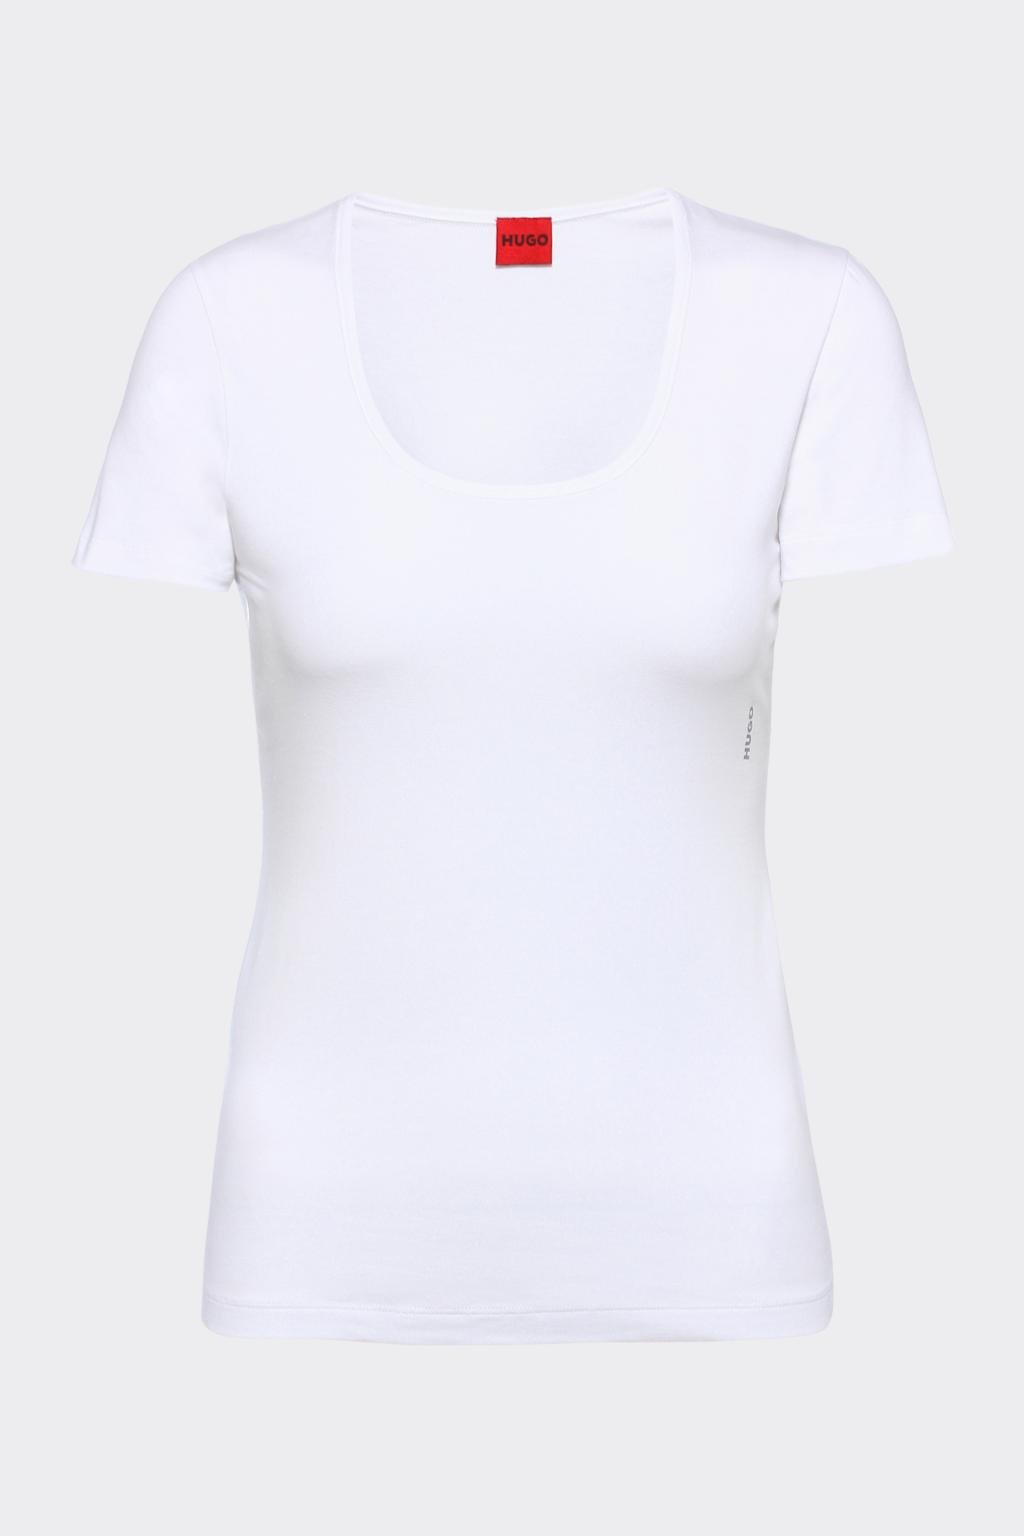 HUGO 2-balení dámských triček - bílá